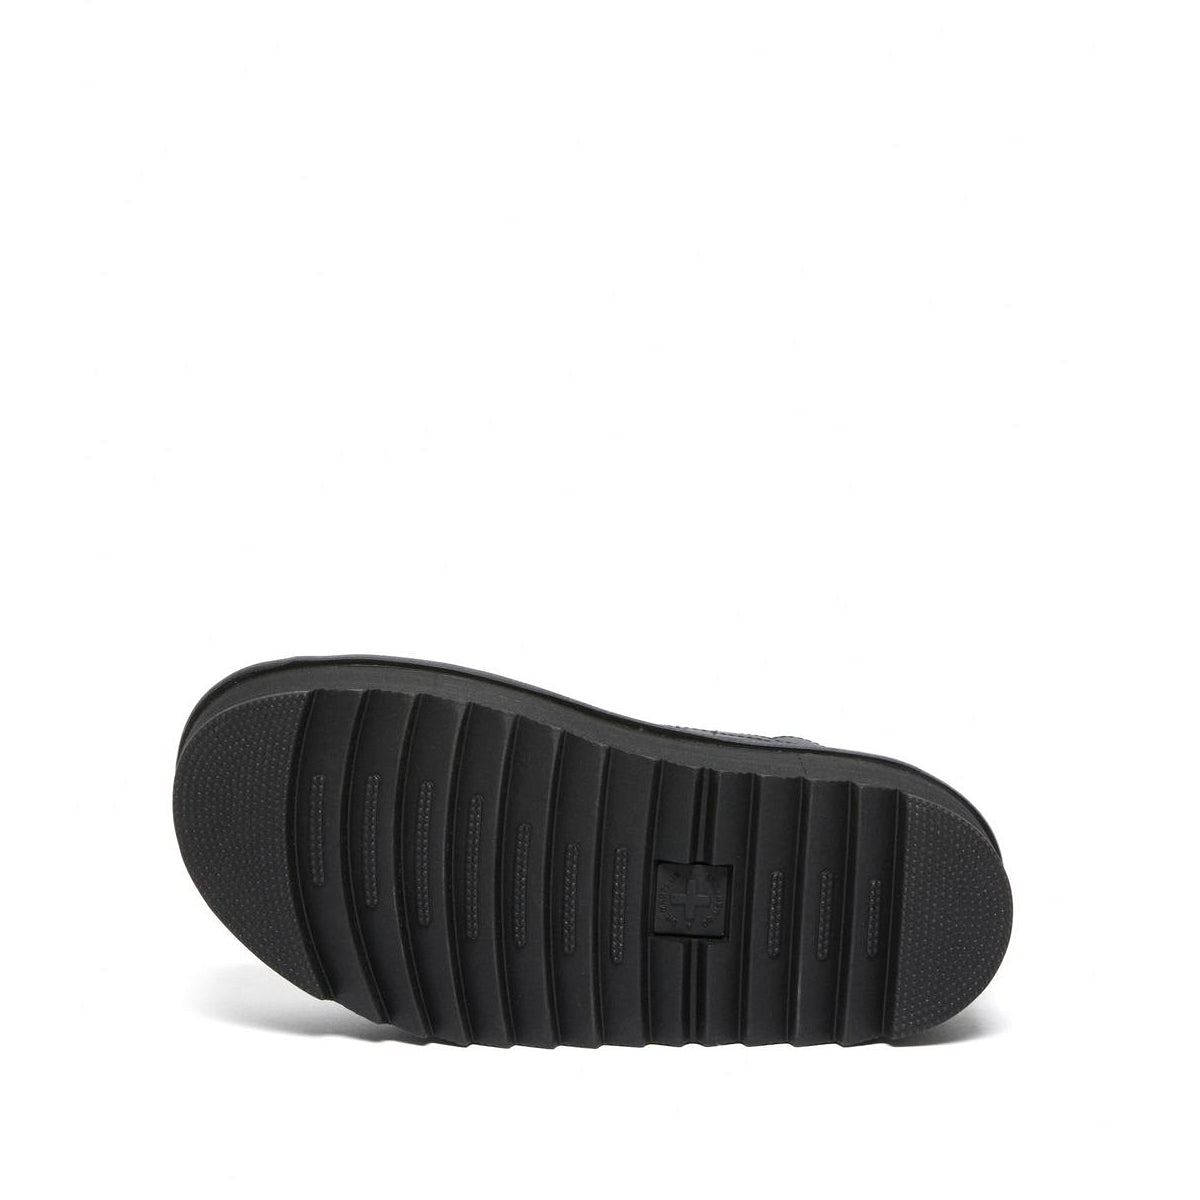 Voss Quad - shoe&amp;me - Dr. Martens - Sandal - Sandals, Summer 22, Wedges, Womens